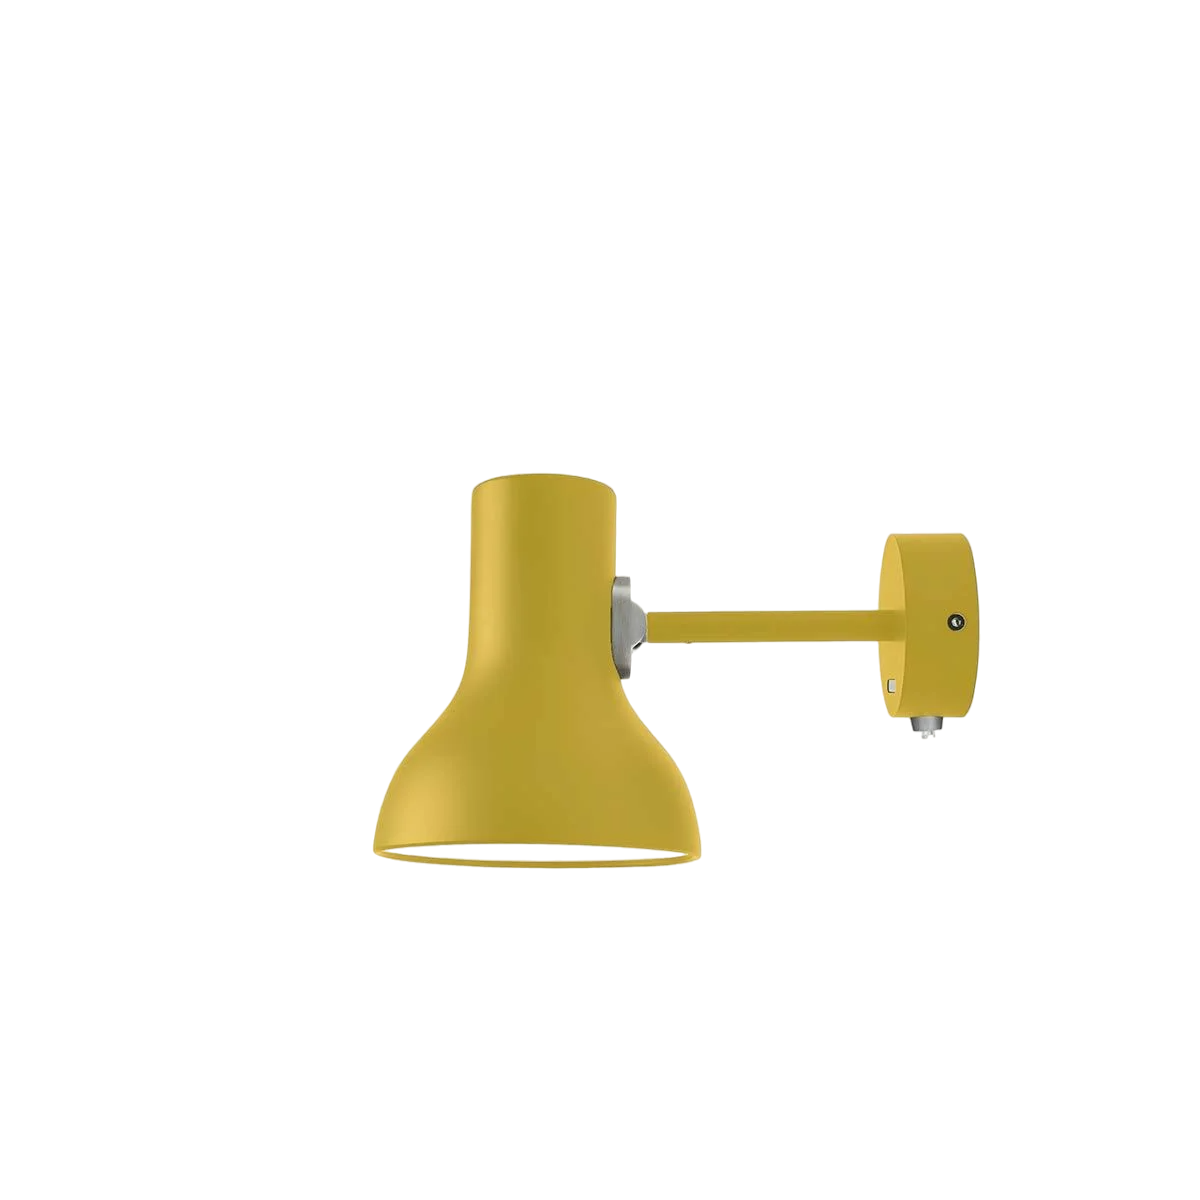 type 75 mini wall light vaeglampe yellow ochre 313c18f7 ca22 4cea a844 cc66333490d0 Photoroom.png Photoroom